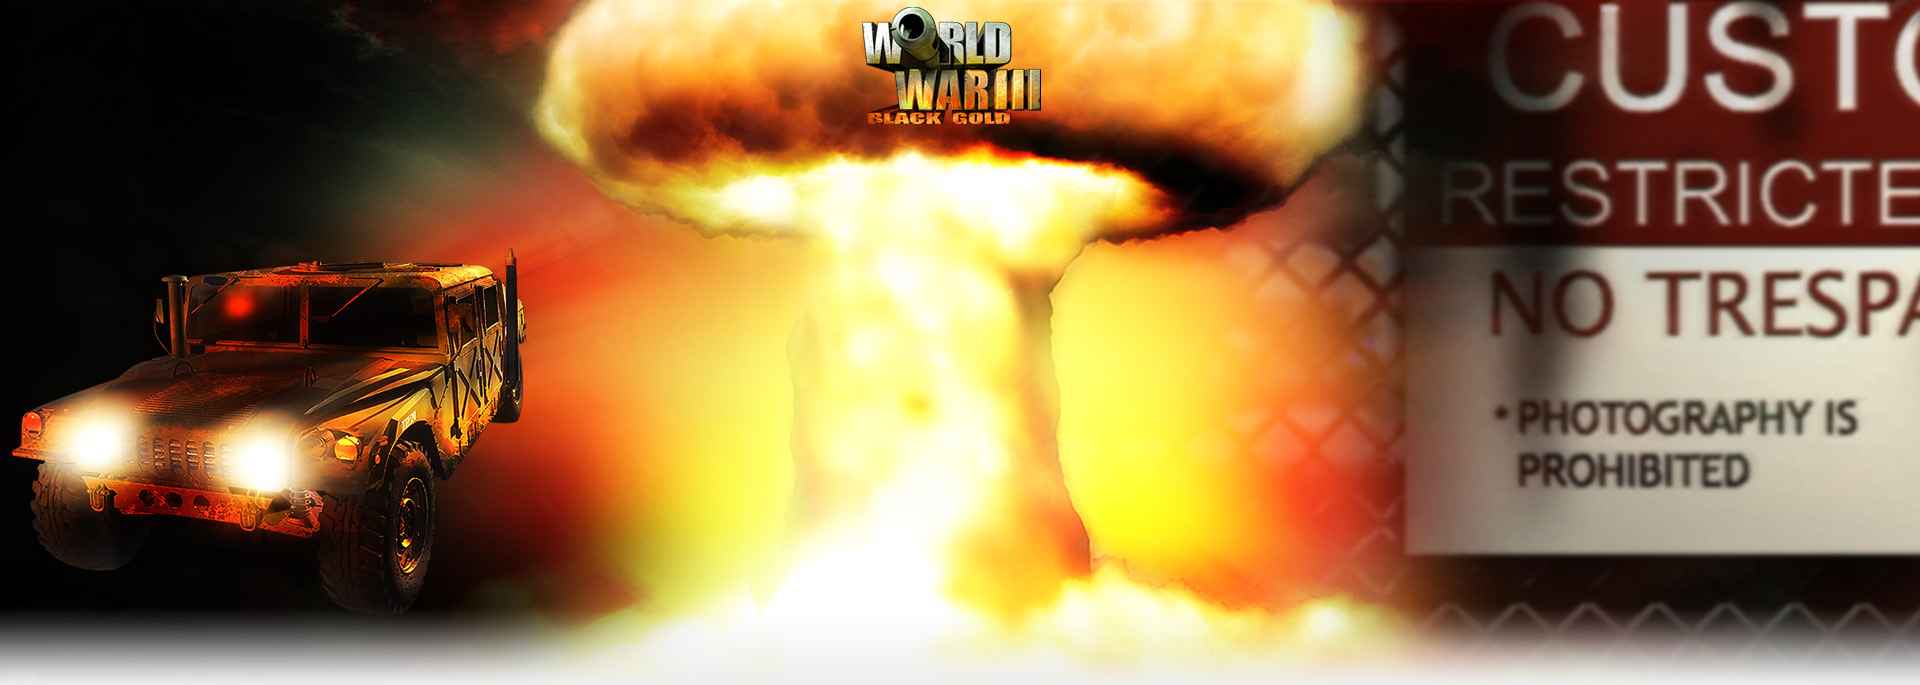 World War III: Black Gold Steam CD Key - background